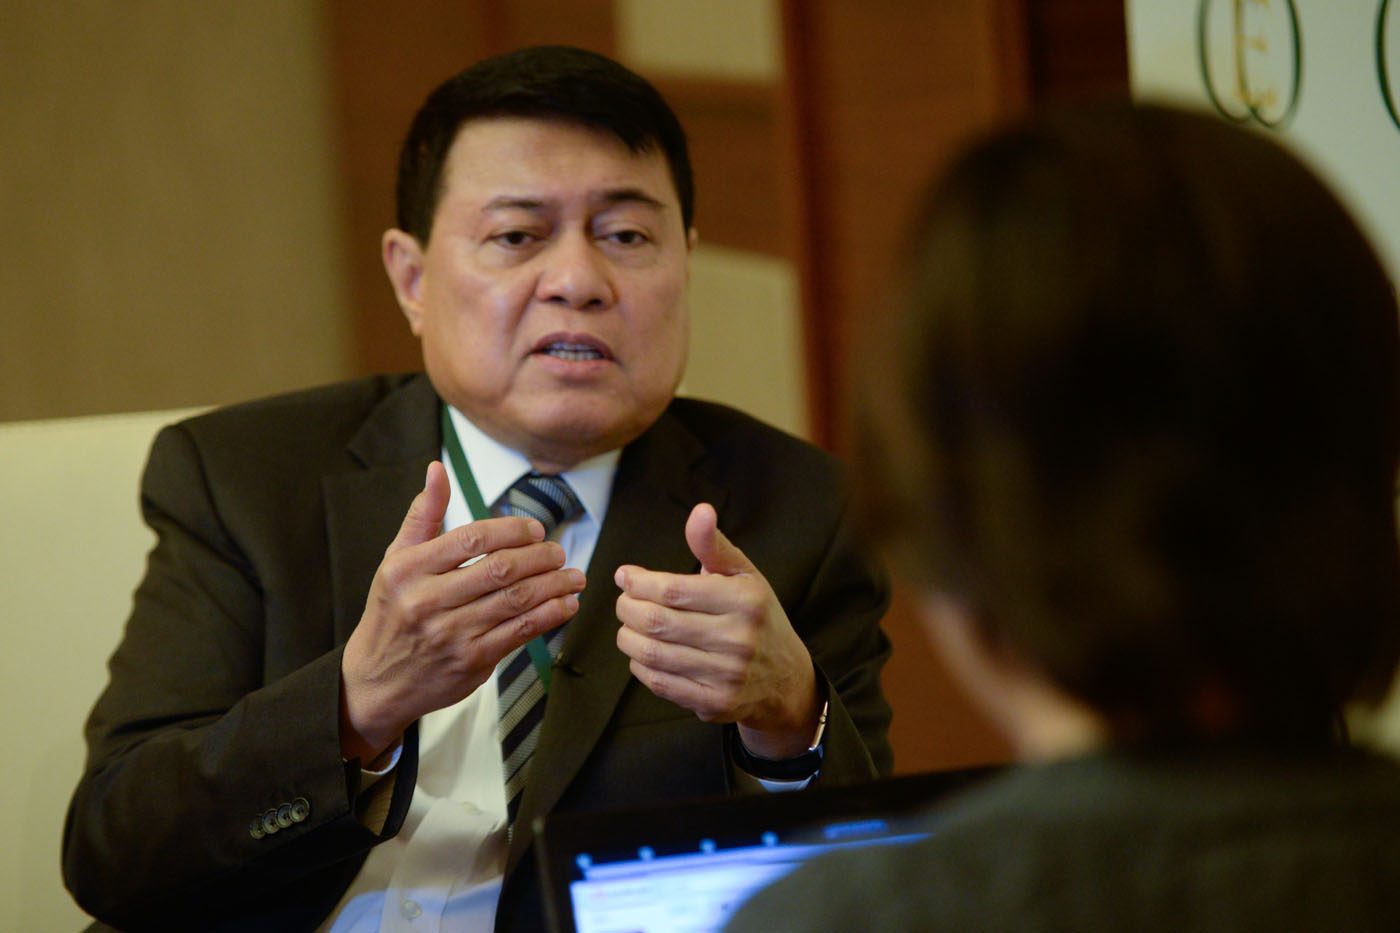 Anticipating huge demand, Manny Villar to build more malls